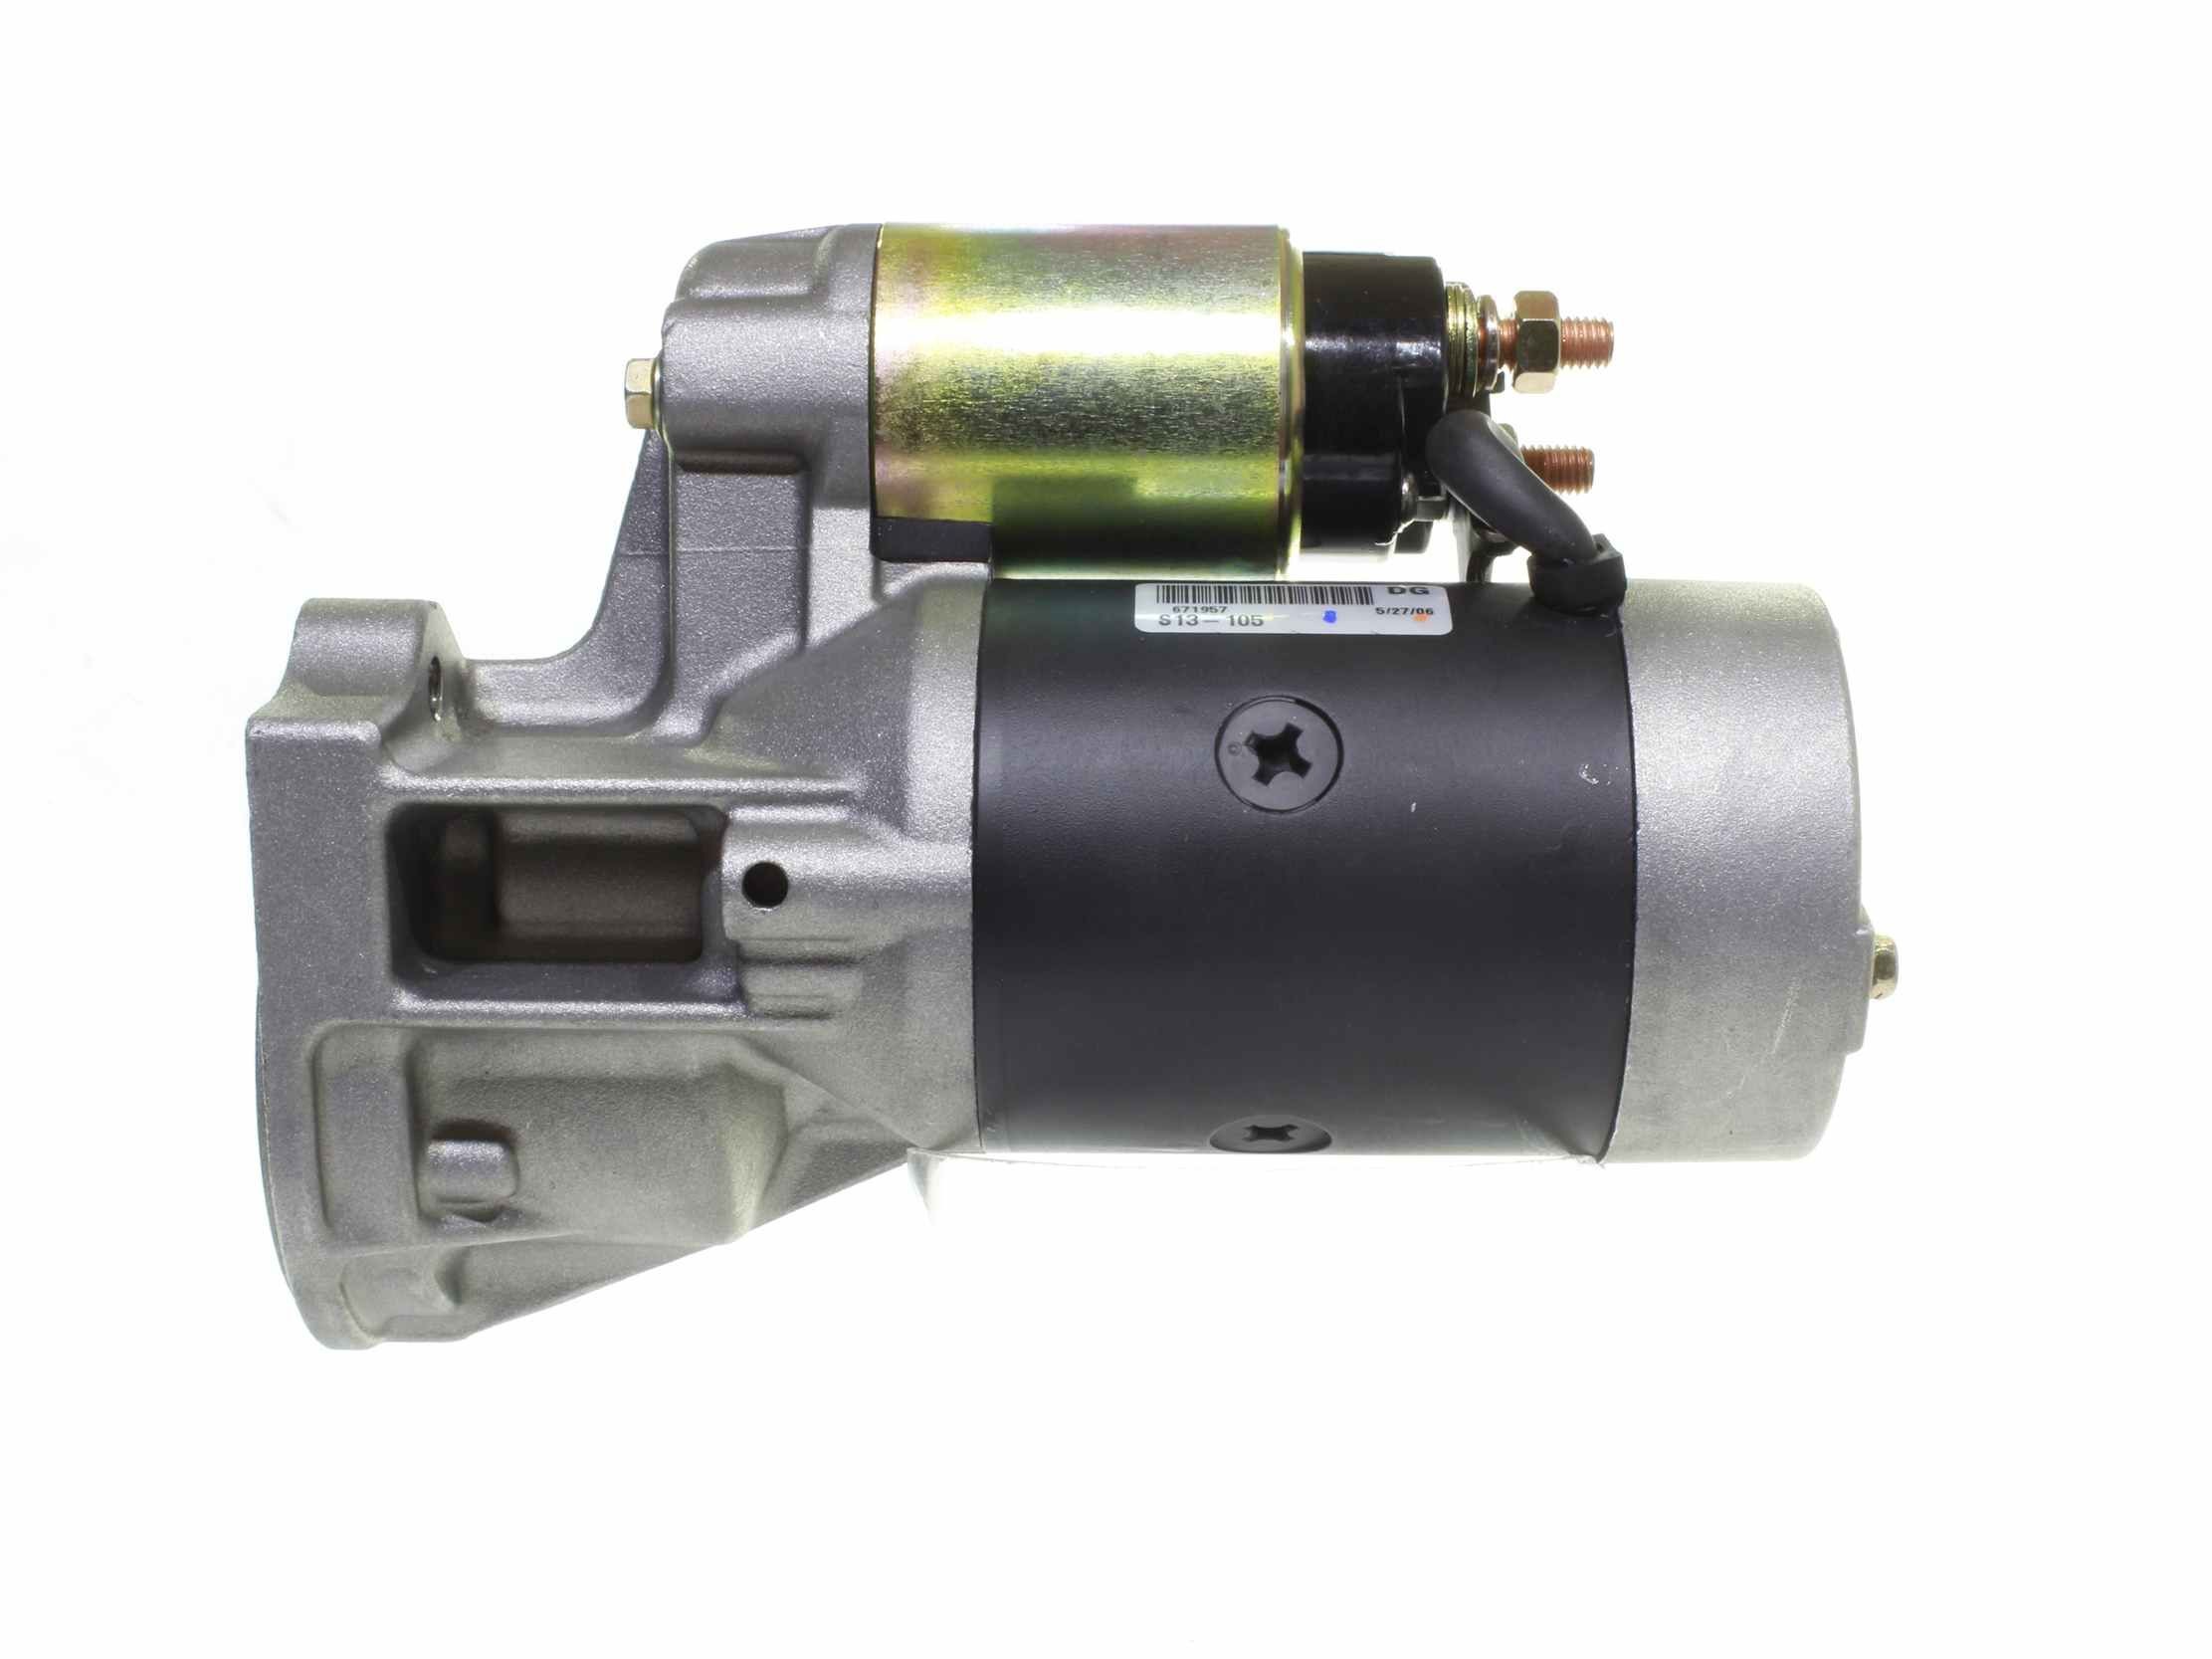 10440205 Engine starter motor ALANKO STR72049 review and test